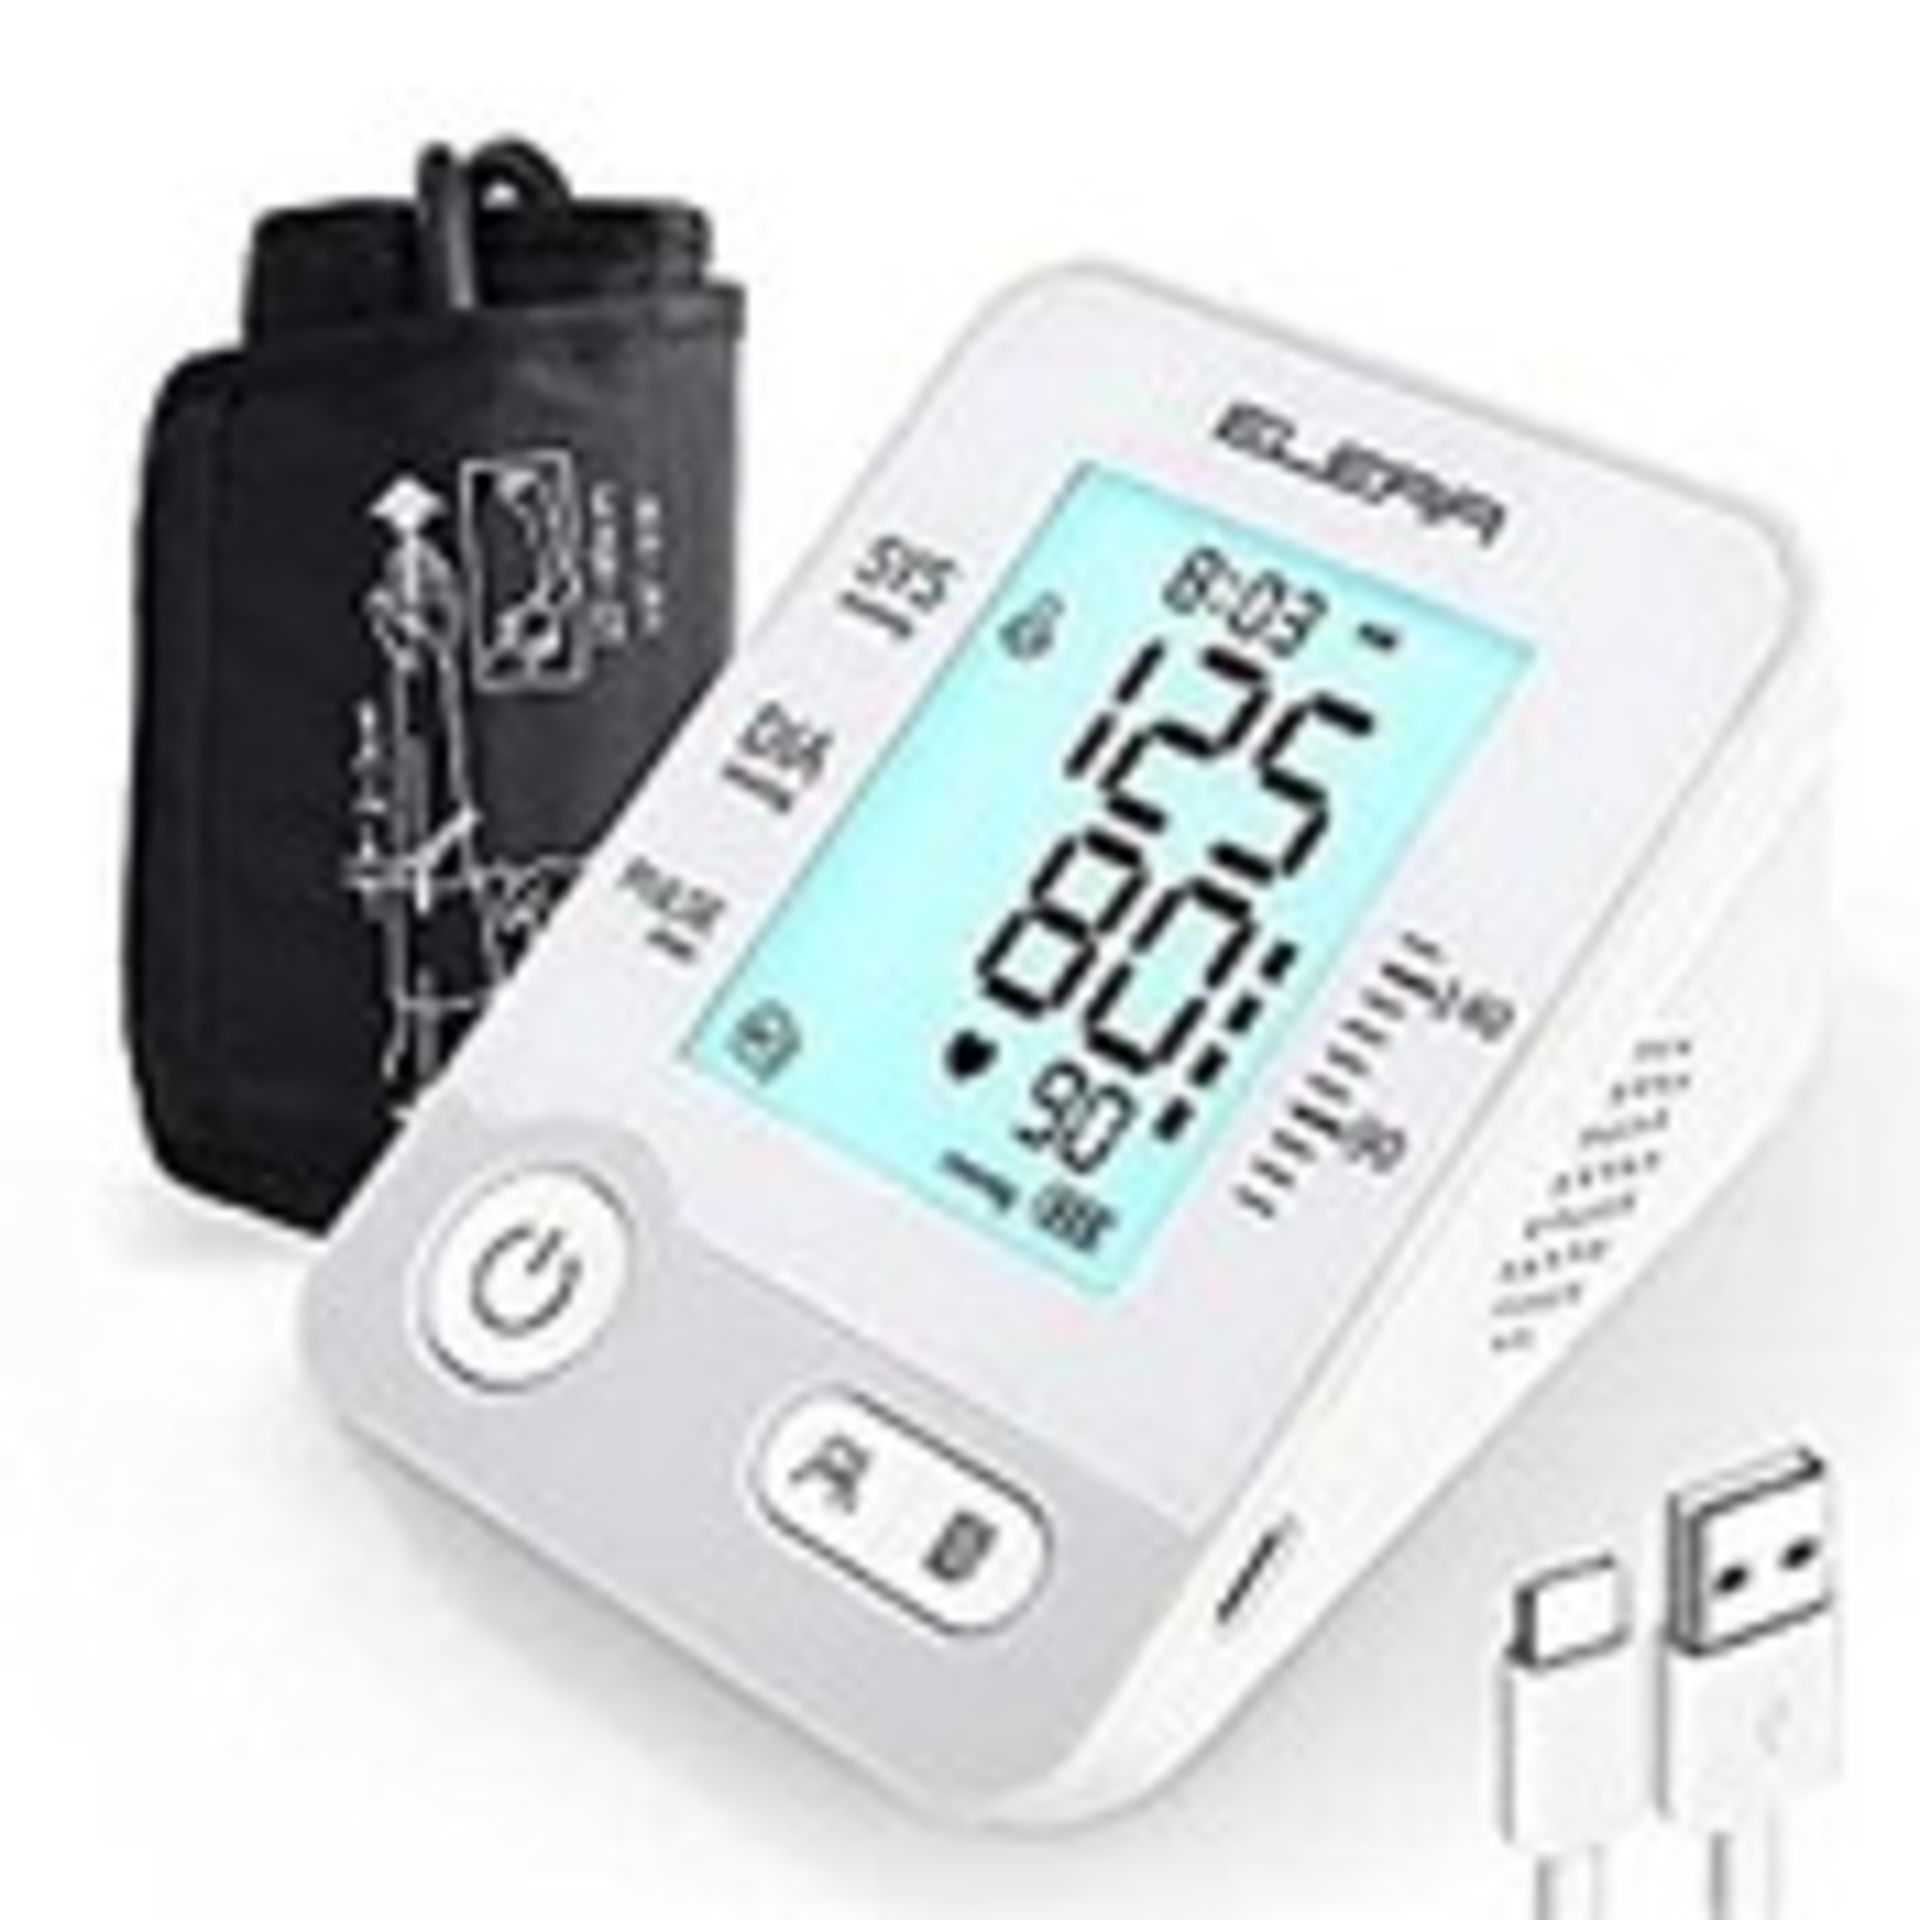 RRP £28.99 Large Cuff Blood Pressure Monitor